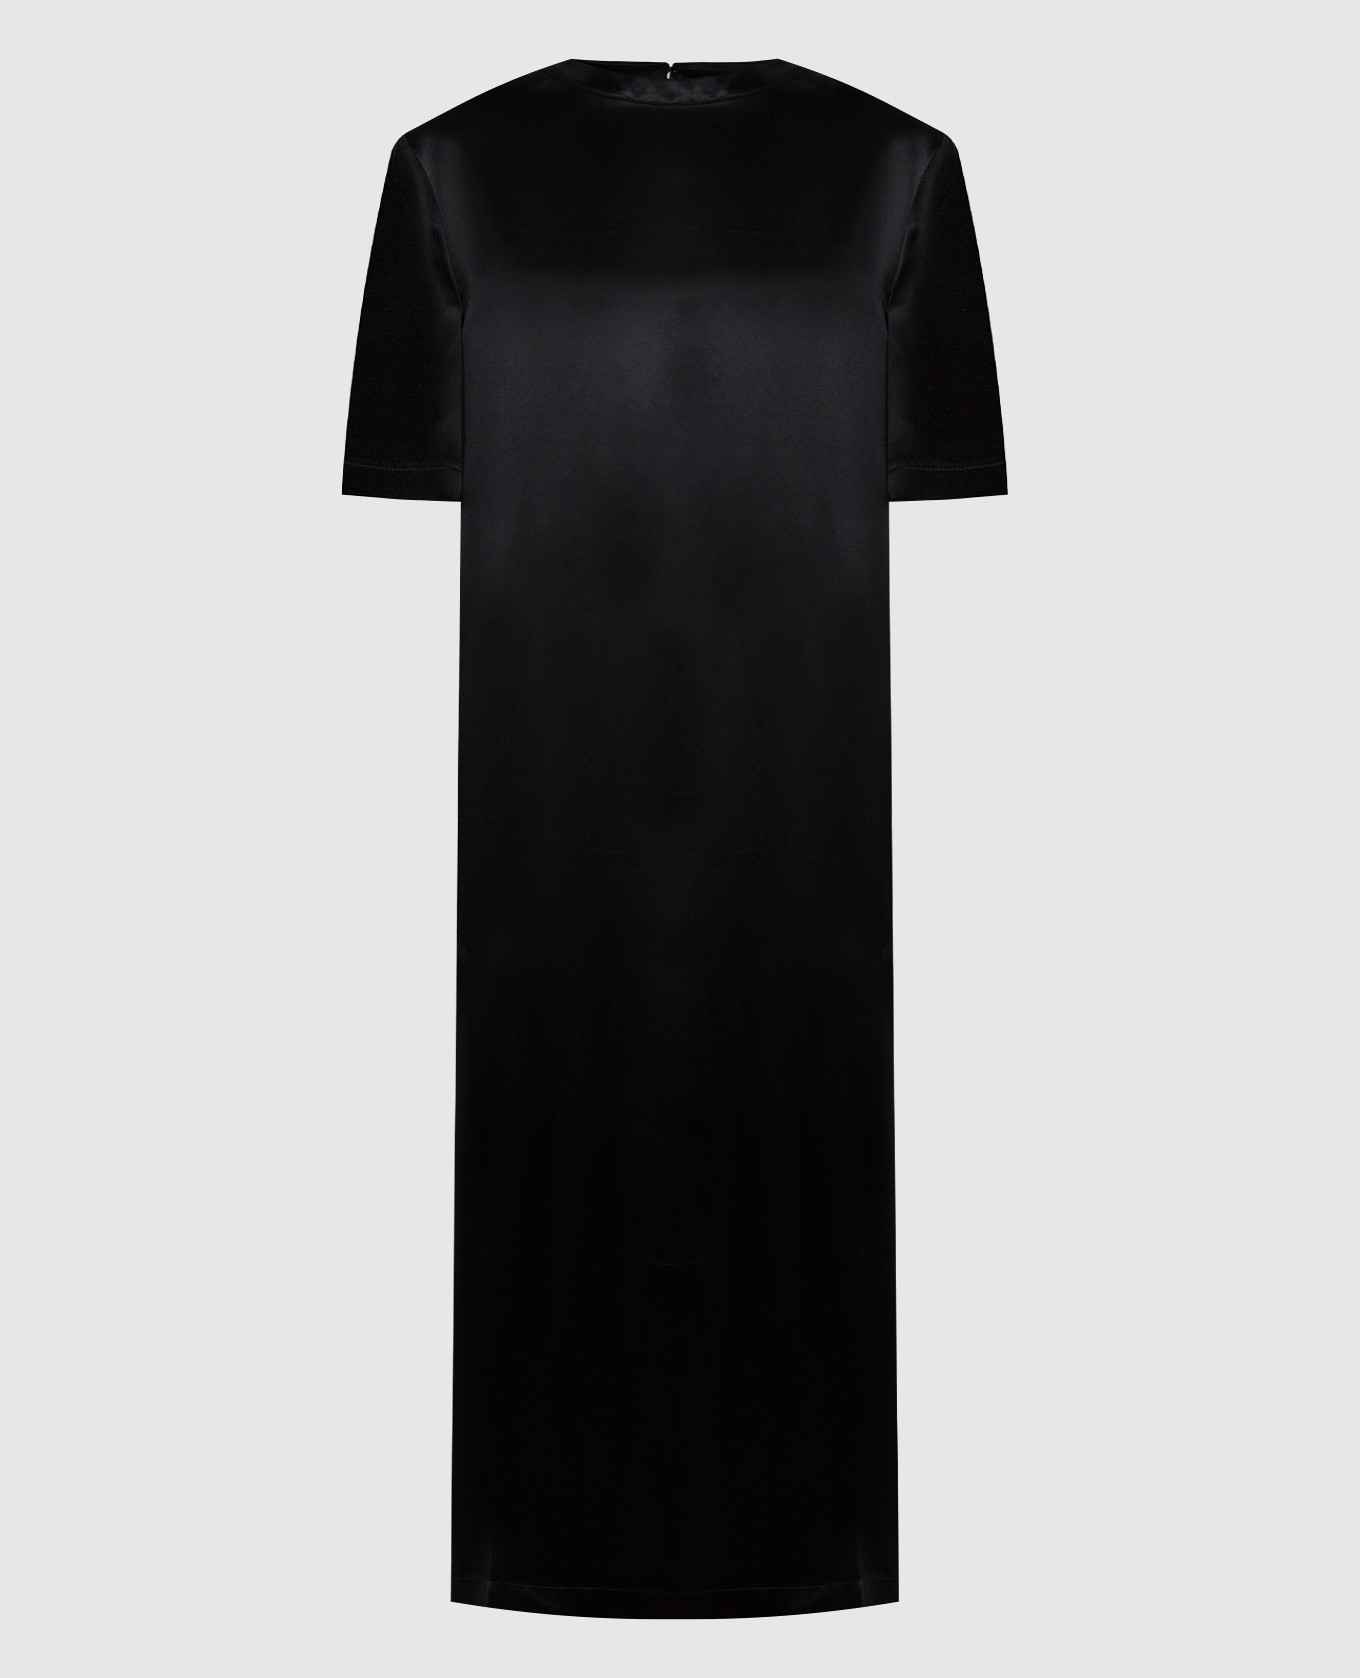 TUGA black dress with silk